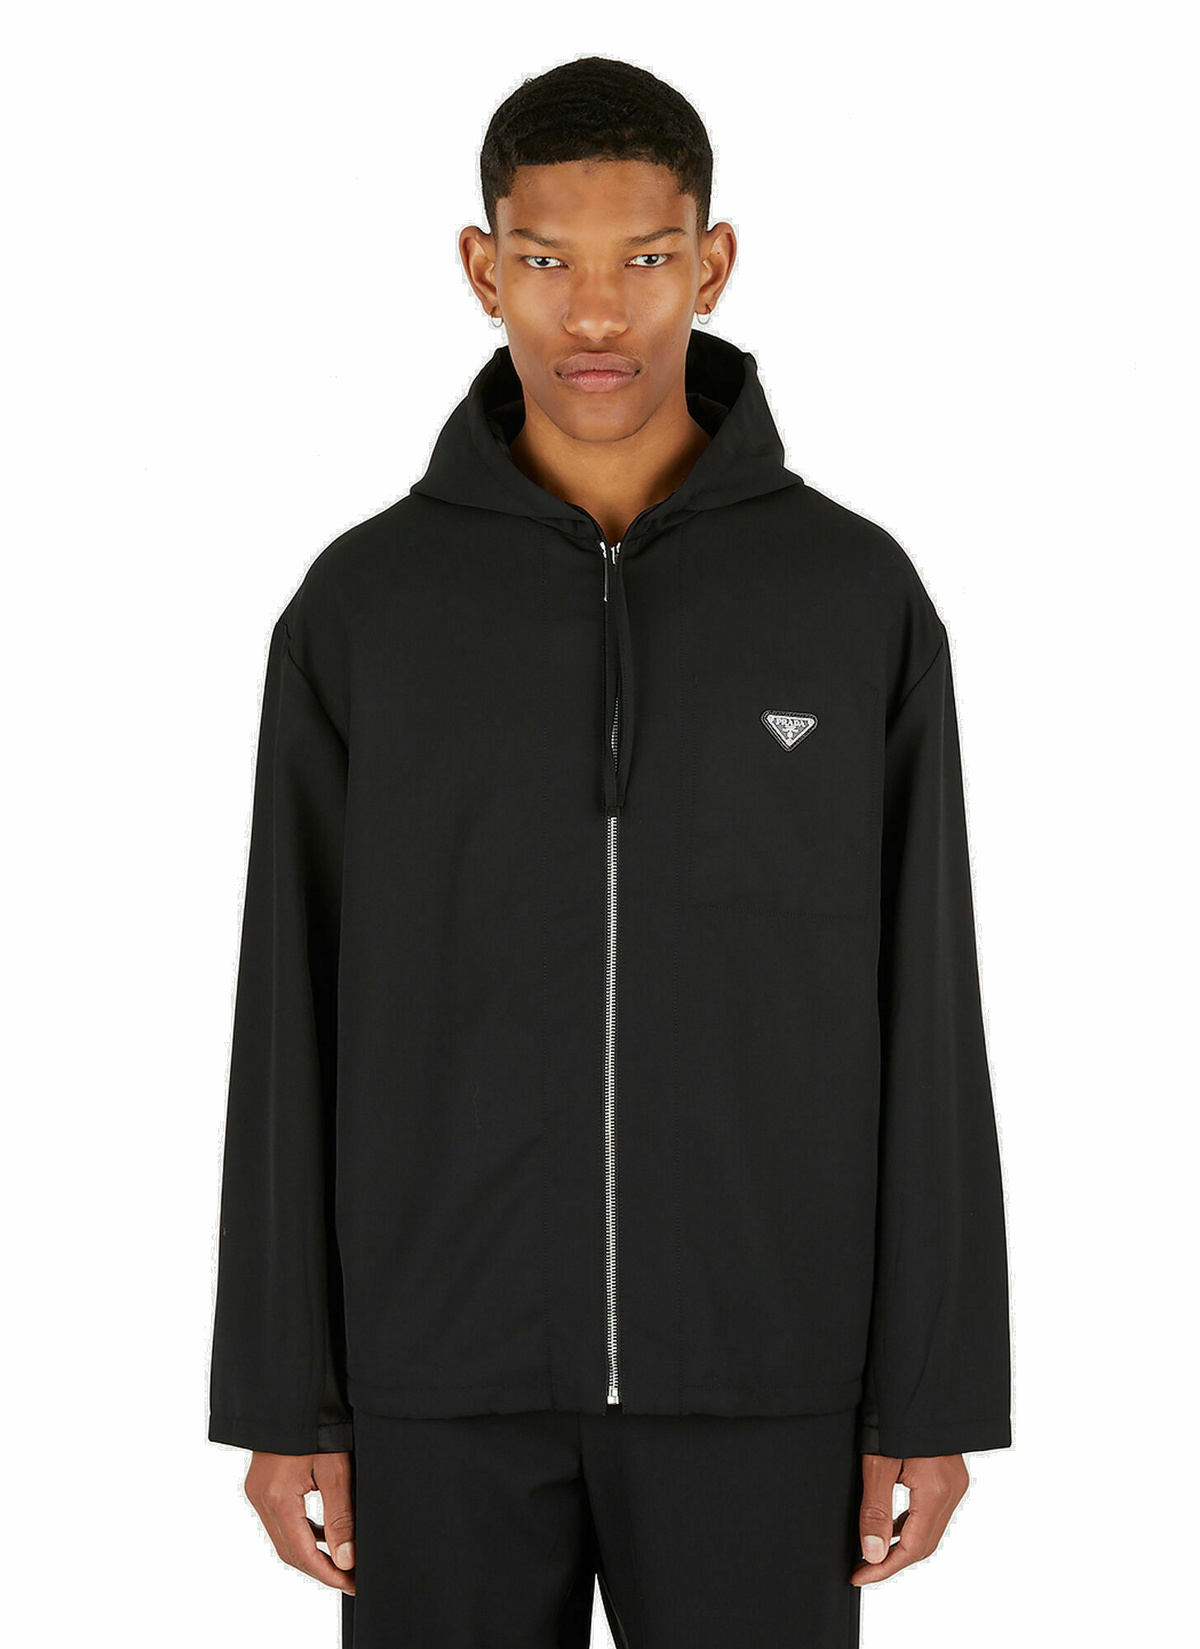 Prada Re-Nylon shirt jacket - Black, £1500.00